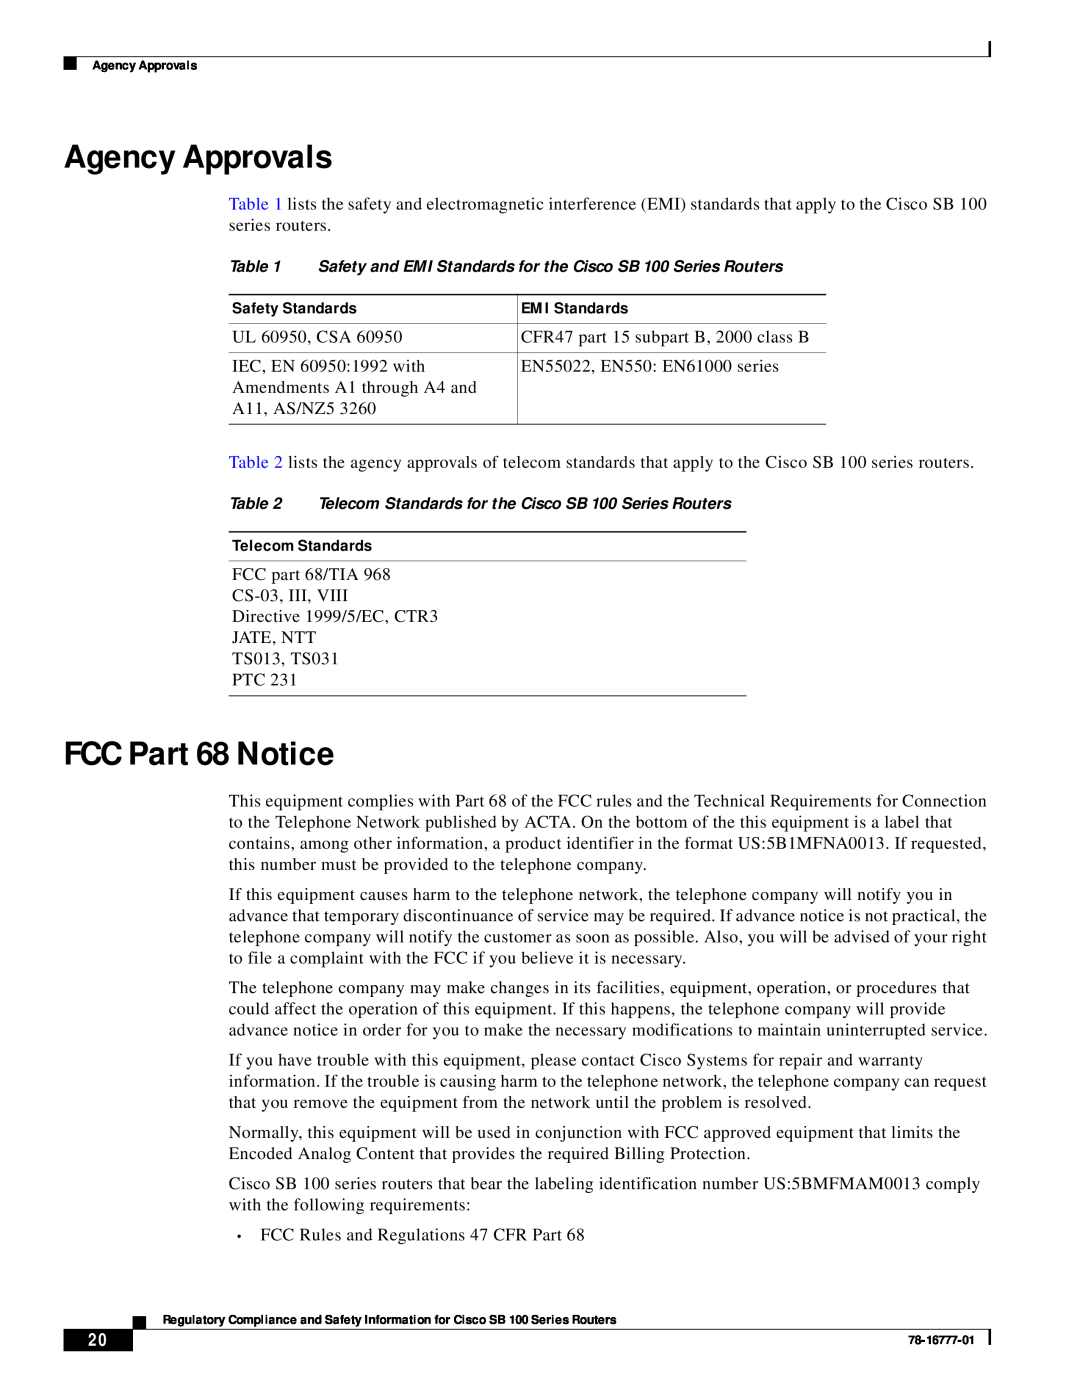 Cisco Systems SB 100 Series manual Agency Approvals, FCC Part 68 Notice, Safety Standards, EMI Standards, Telecom Standards 